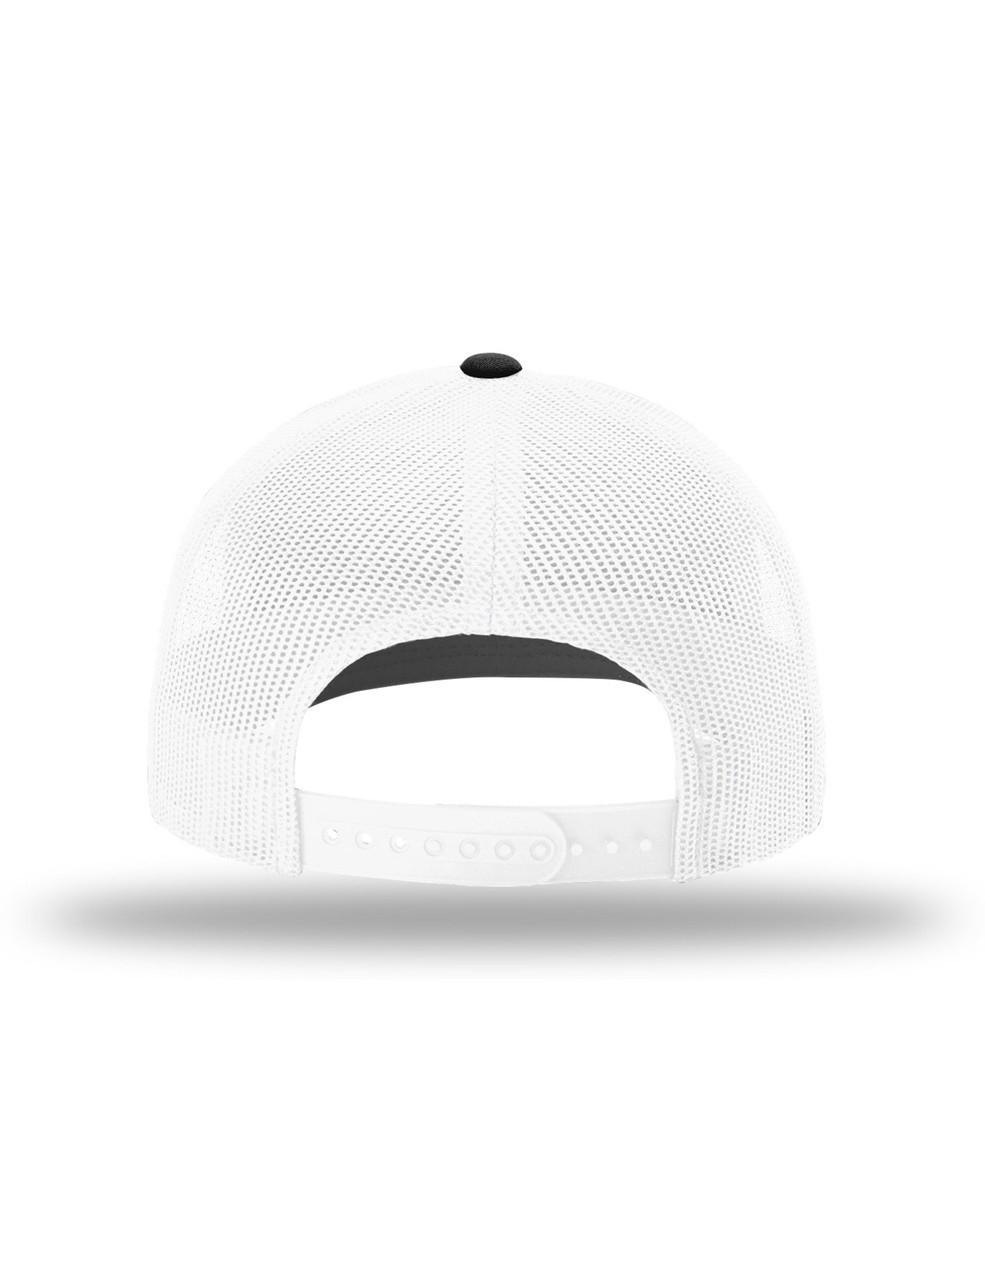 New - Peterbilt Richardson 112 Black/White Trucker Cap Hat